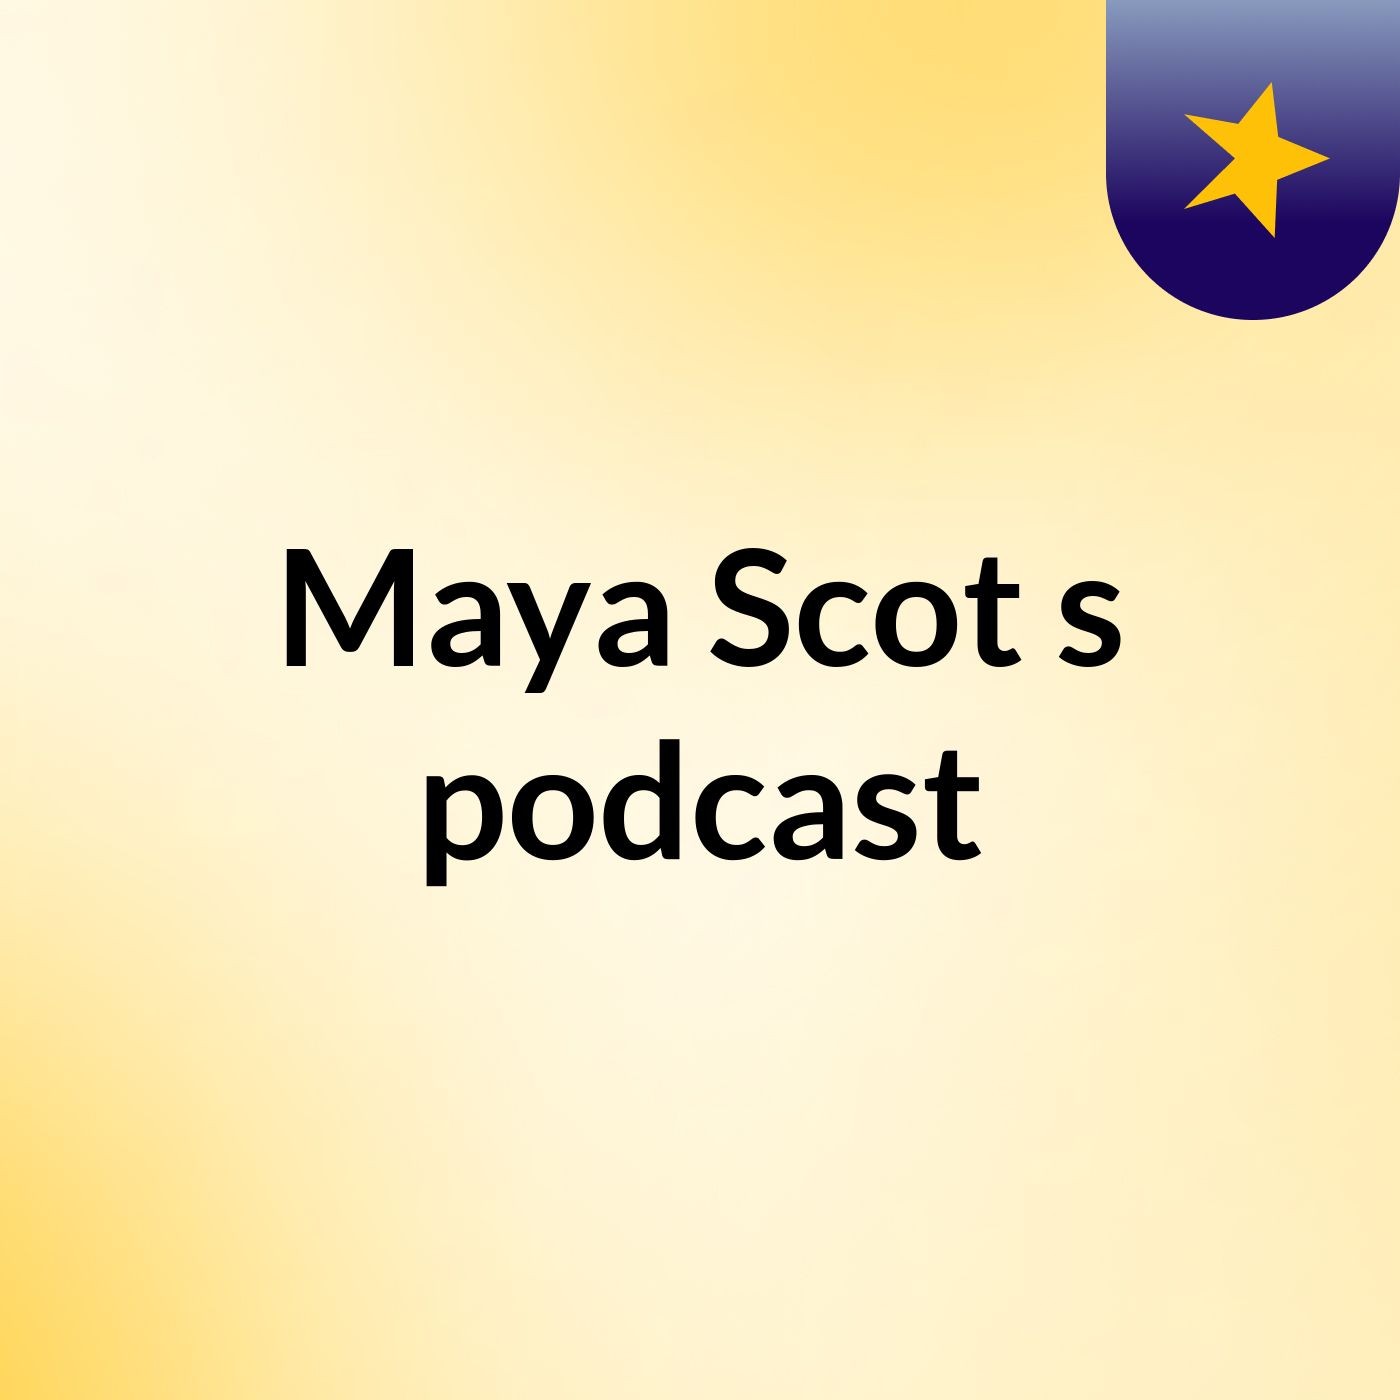 Maya Scot's podcast